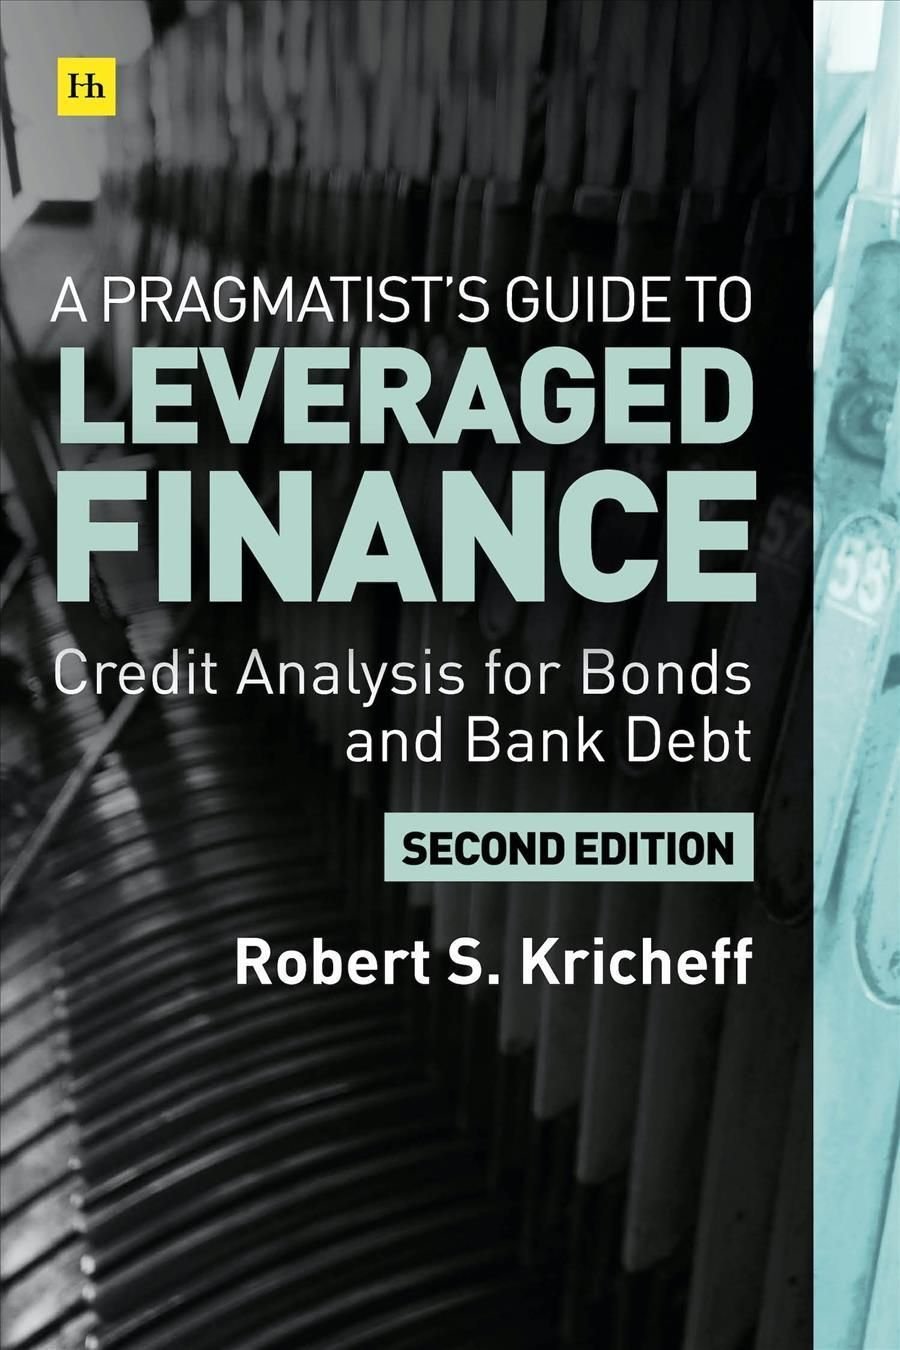 A Pragmatist's Guide to Leveraged Finance